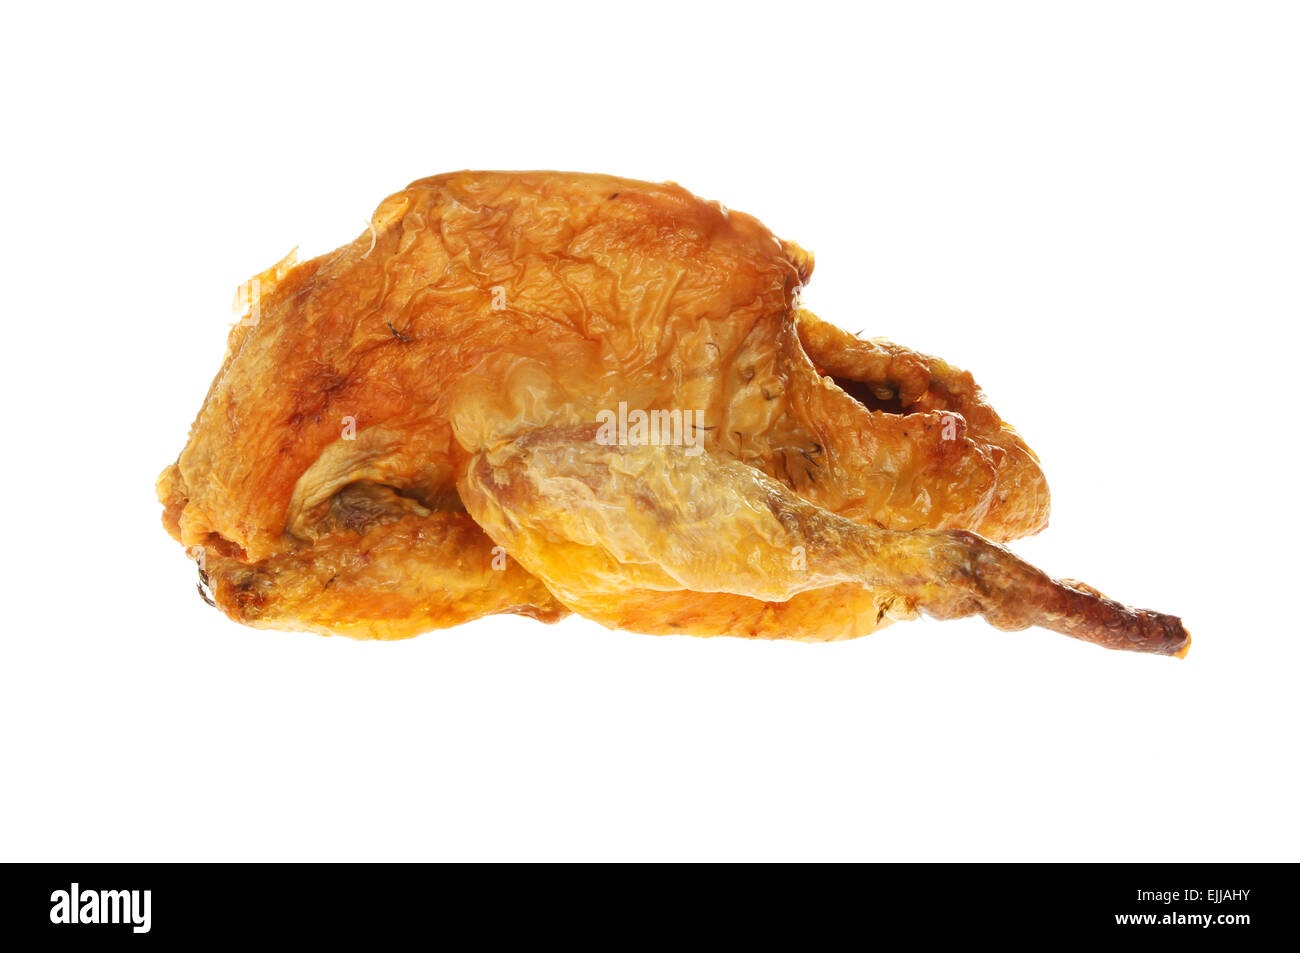 Asado de gallina de Guinea aislados contra un blanco Foto de stock